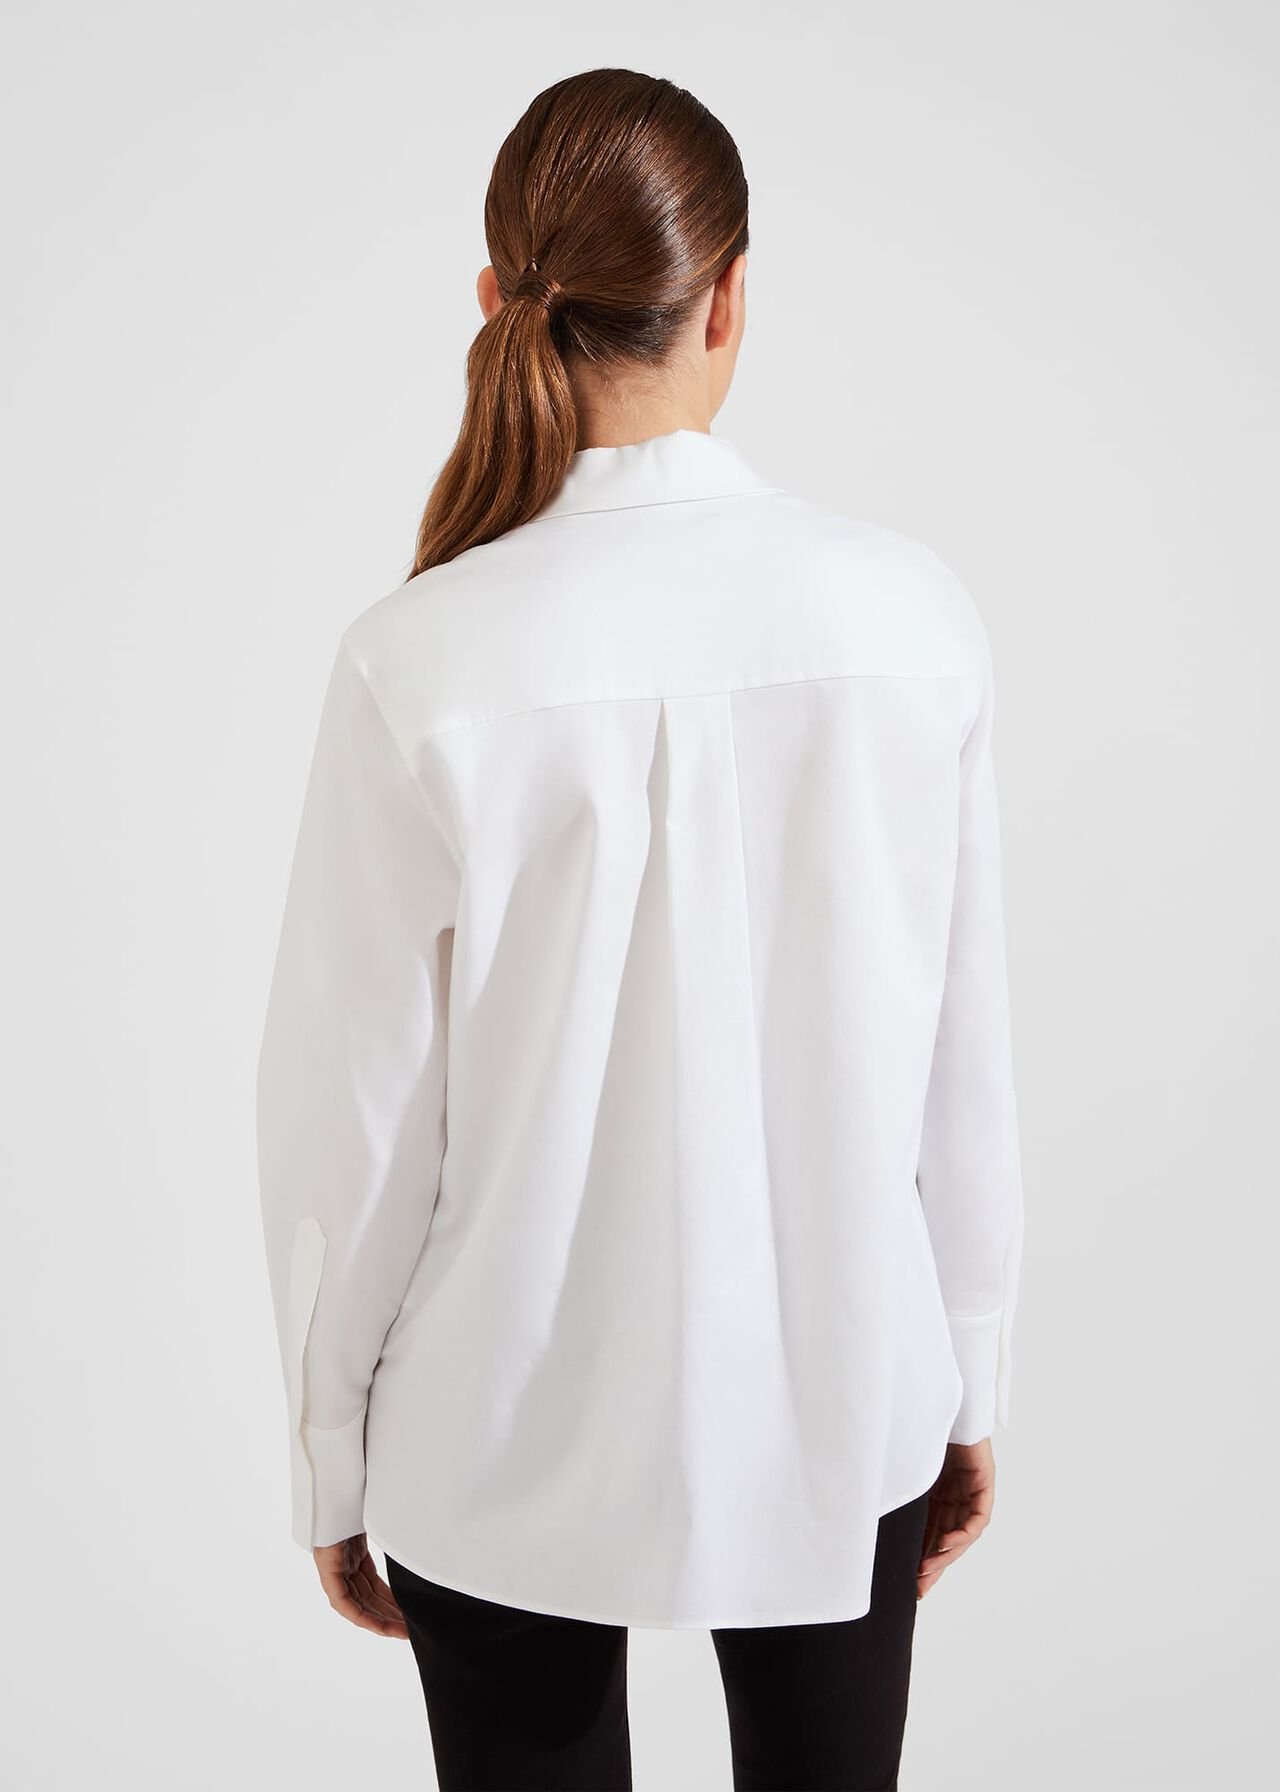 Safi Cotton Blend Shirt, White, hi-res